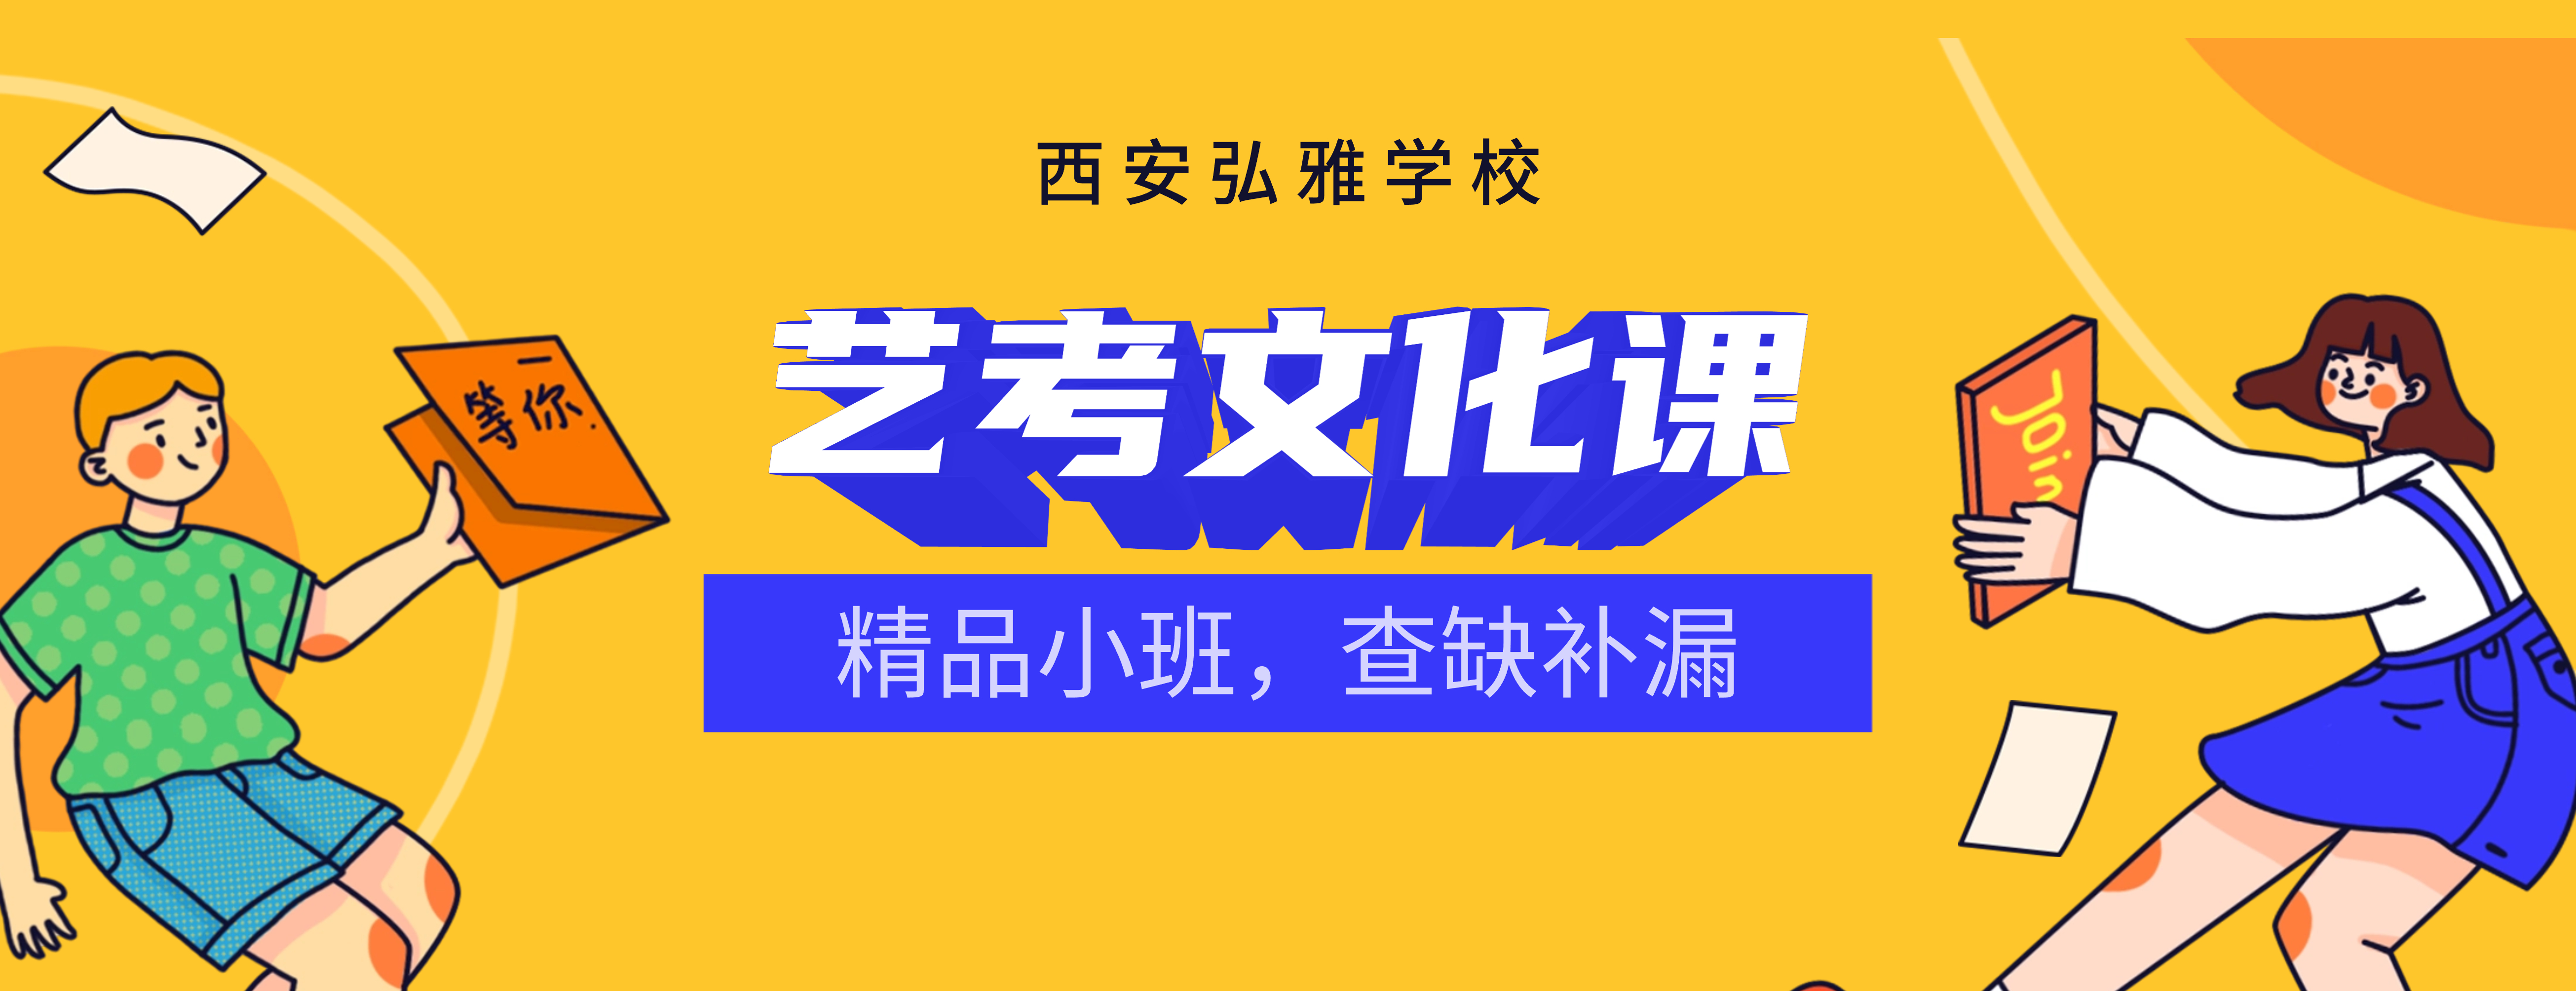 西安弘雅学校banner